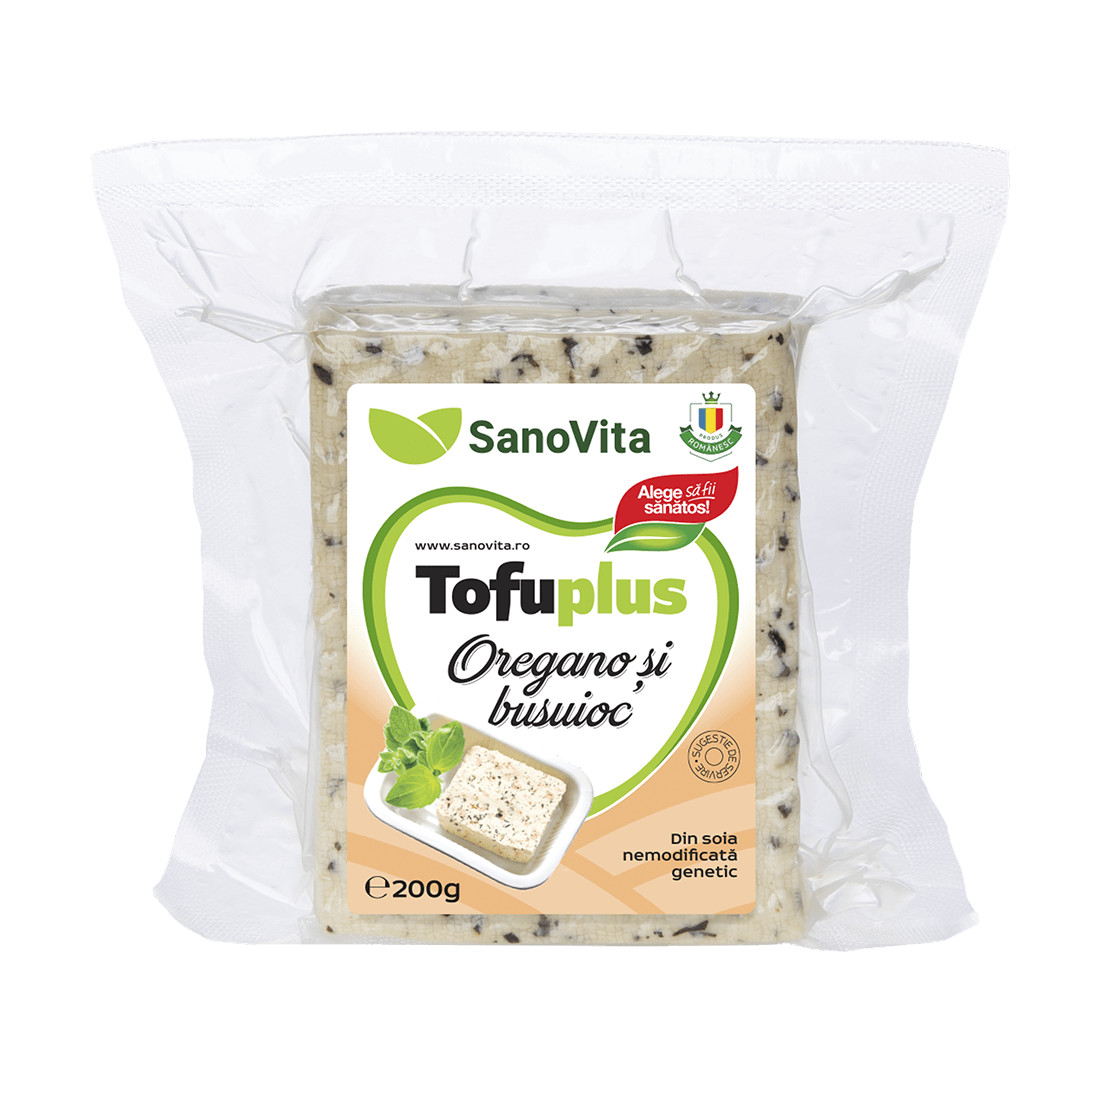 Tofuplus cu oregano si busuioc - 200 g